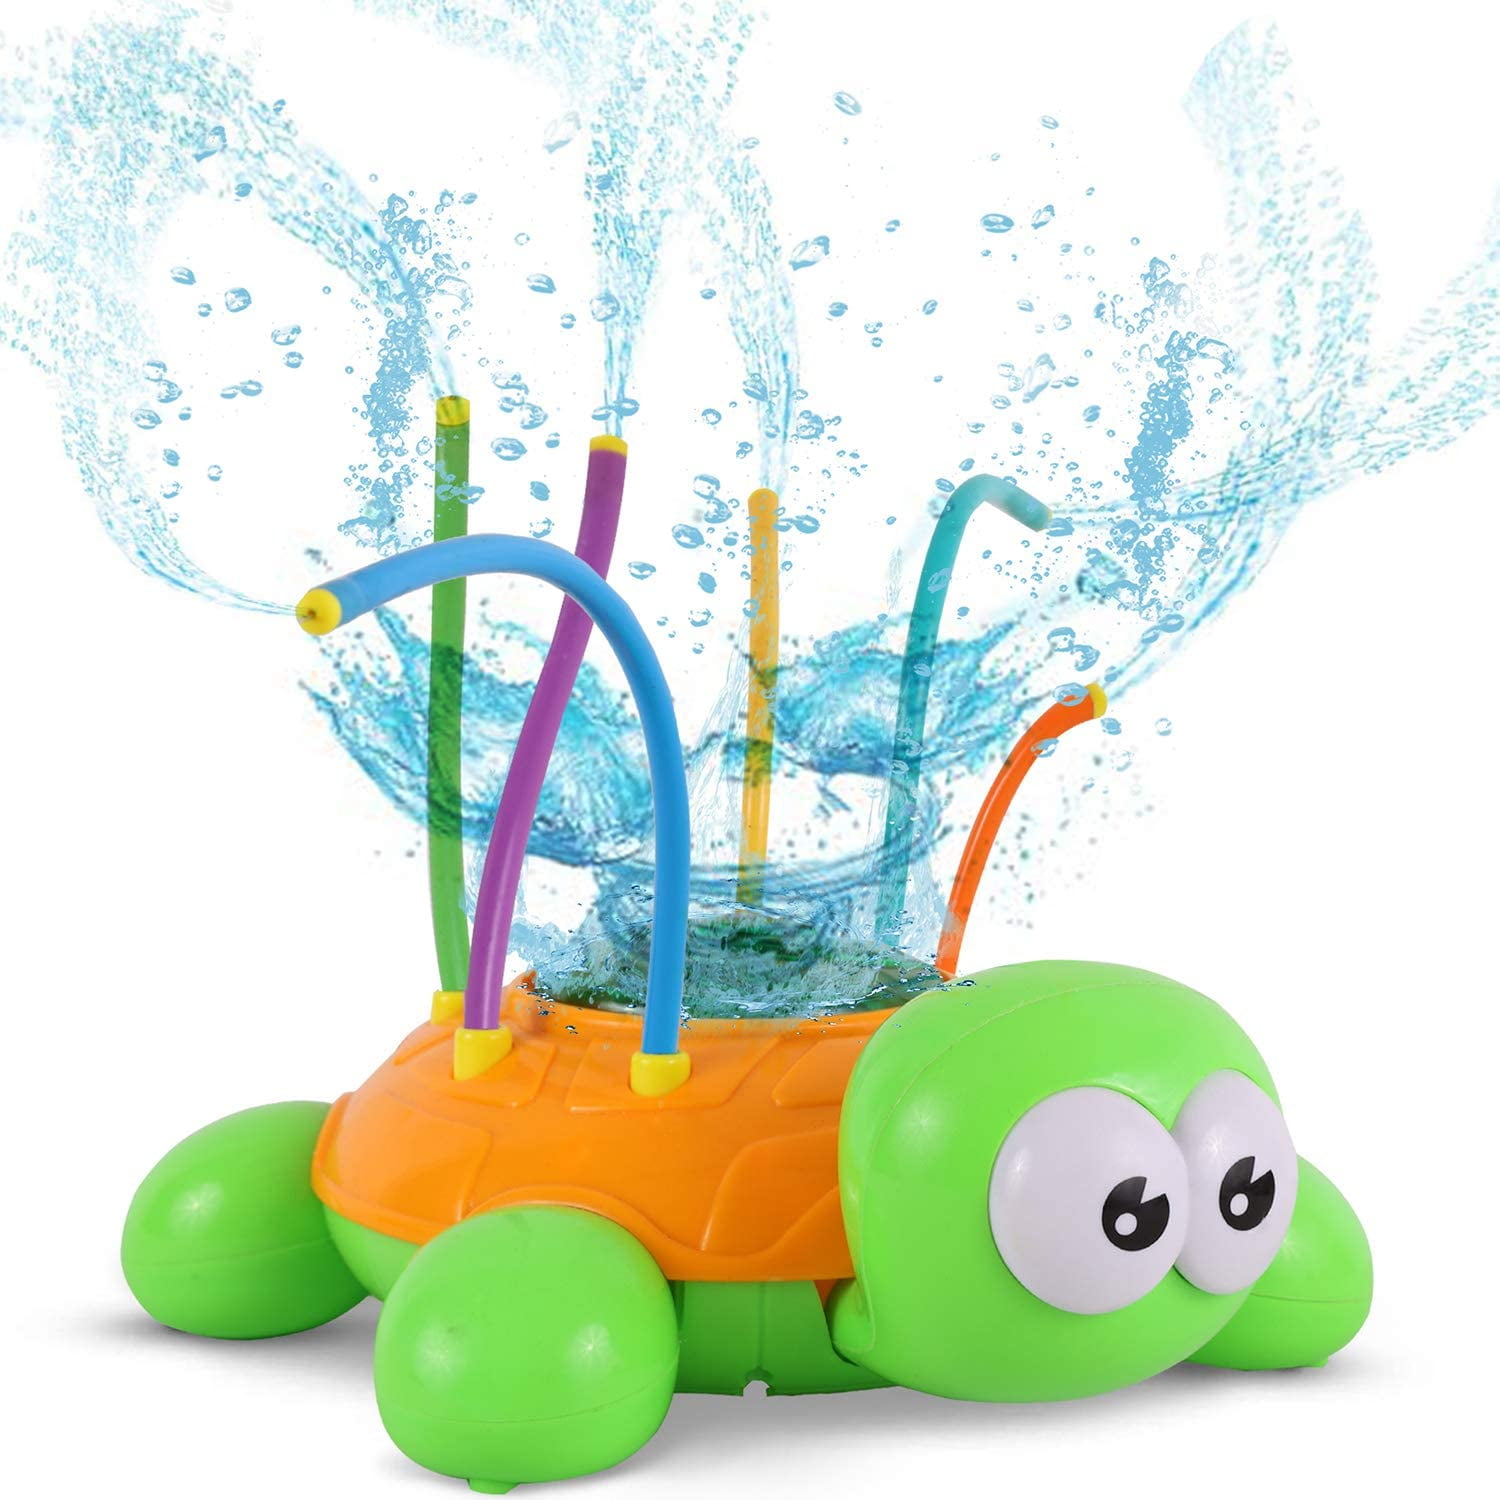 Outdoor Water Activity Spray Sprinkler for Fun Summer Lawn Backyard Yard Games NUOBESTY Water Sprinkler for Kids Spinning Flower Sprinkler Toy